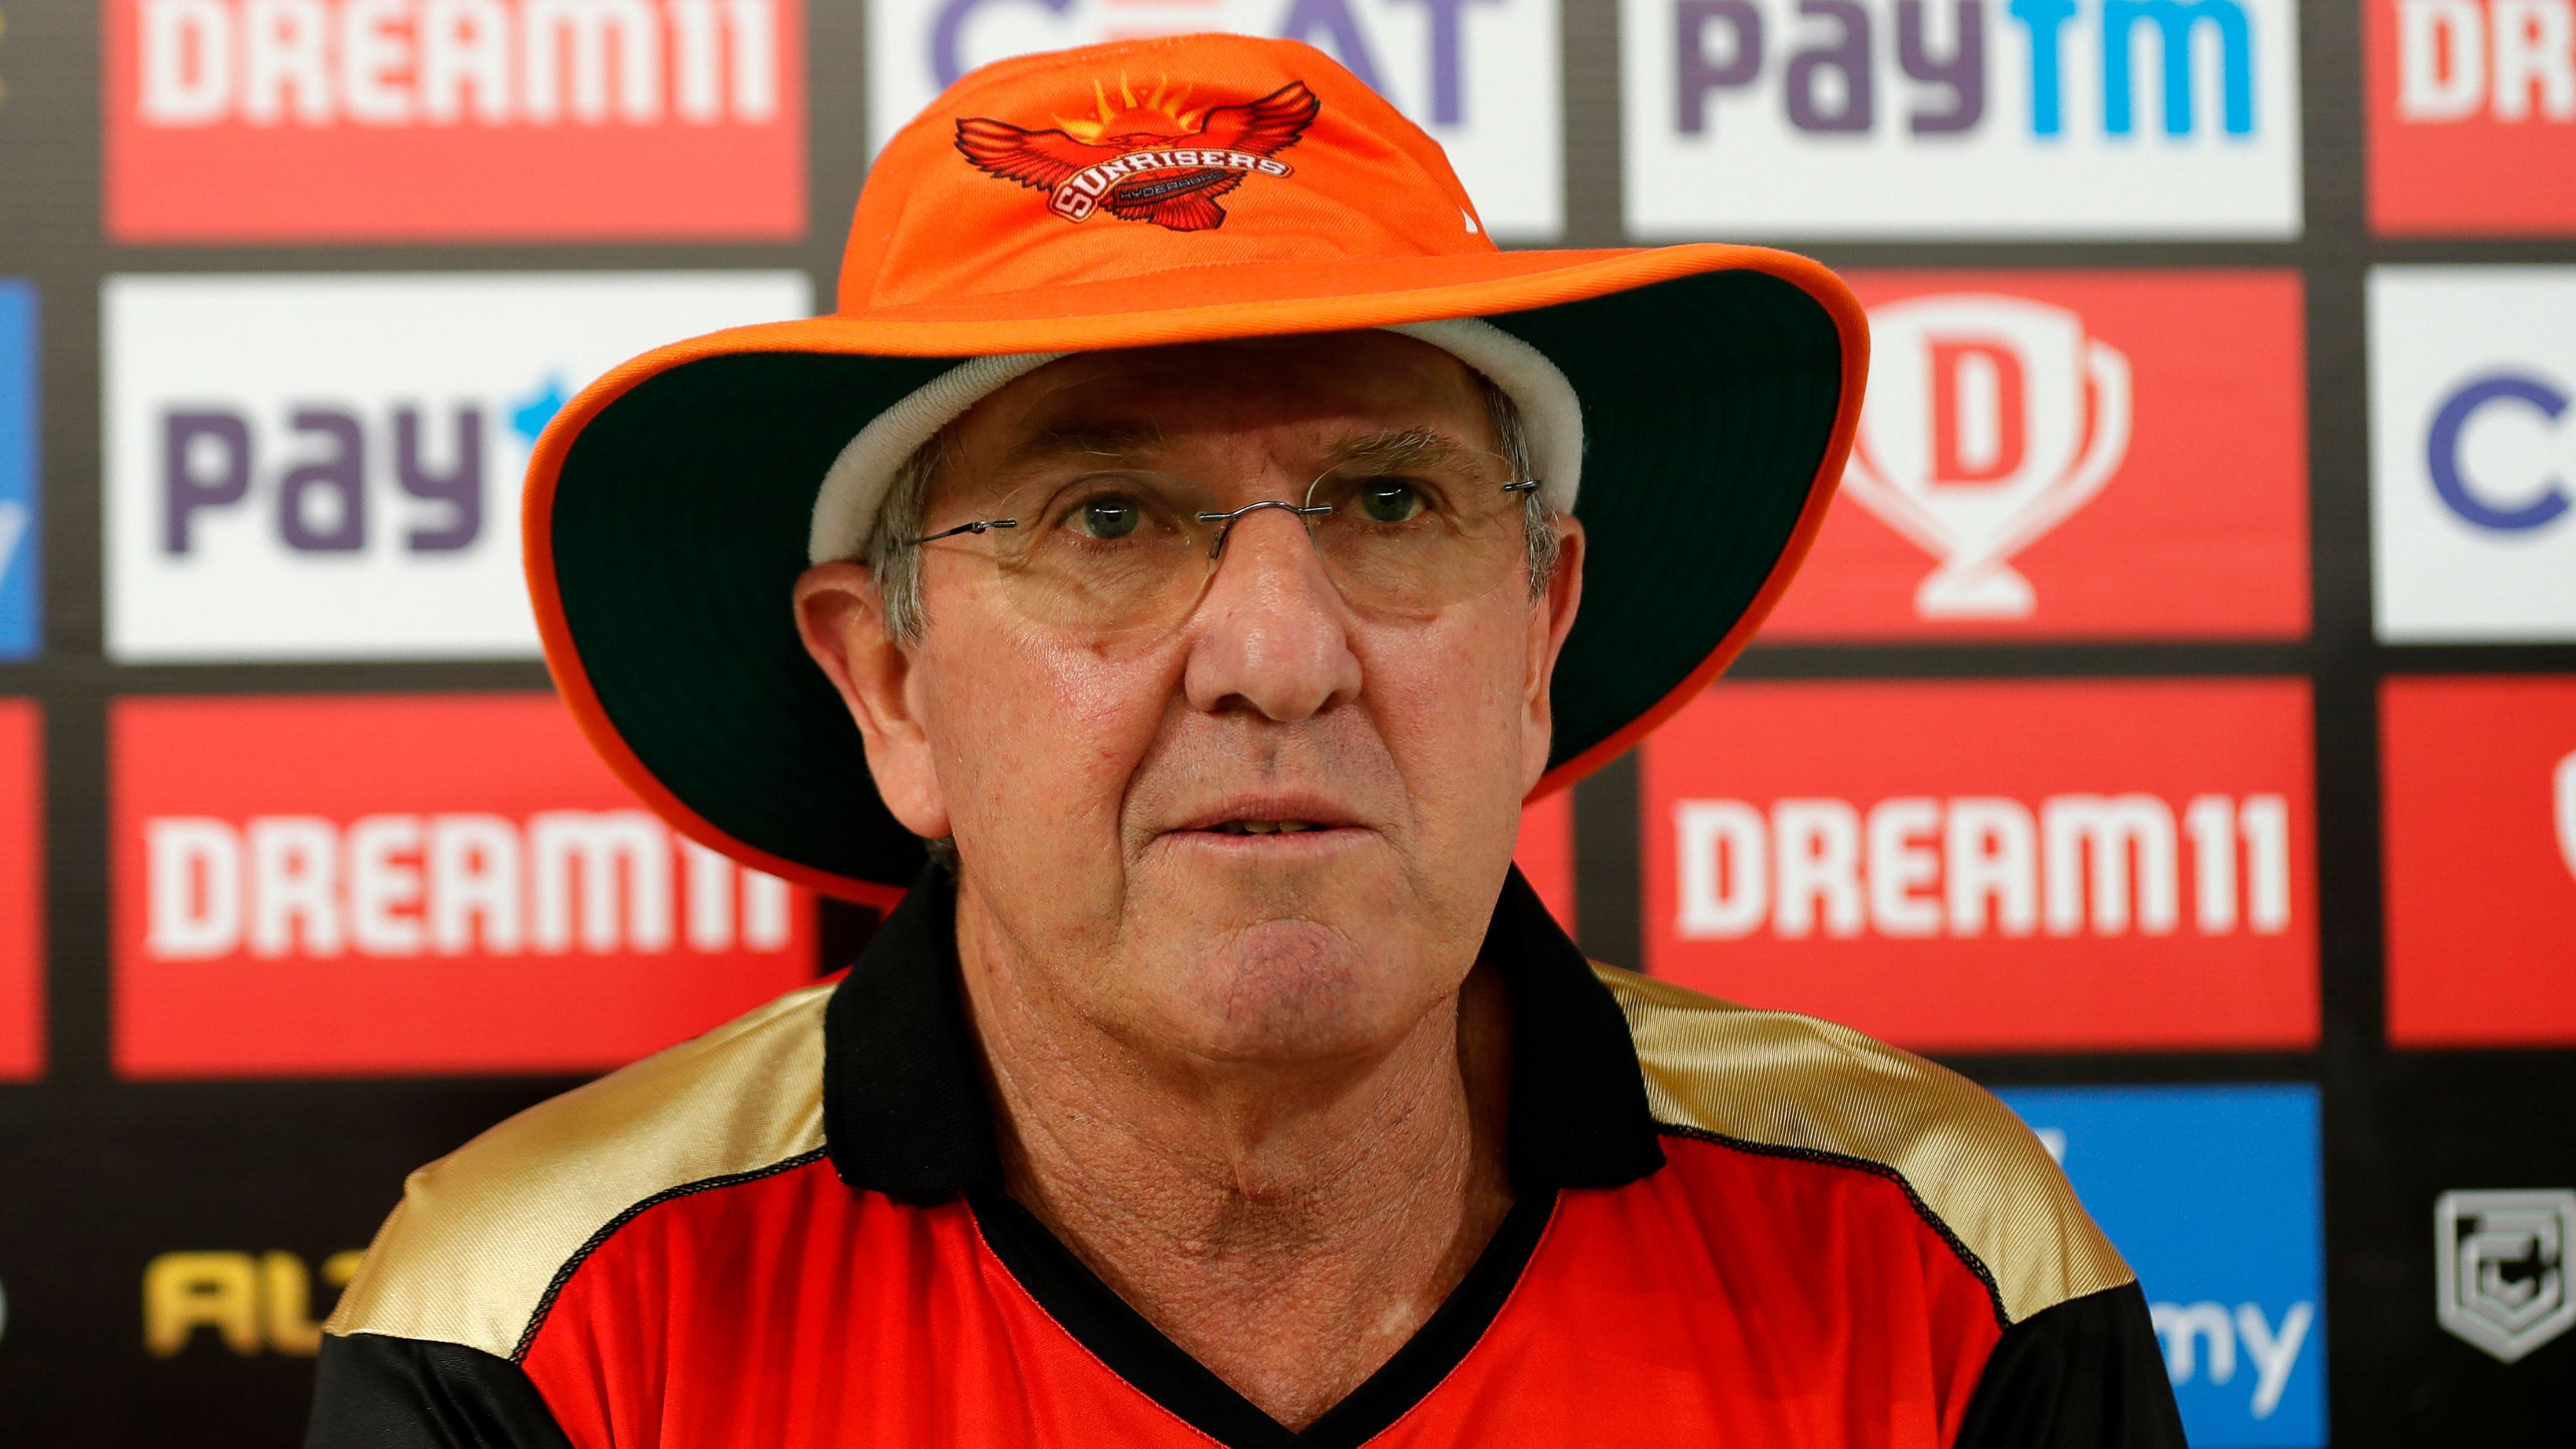 Trevor Bayliss steps down as Sunrisers Hyderabad head coach: Reports